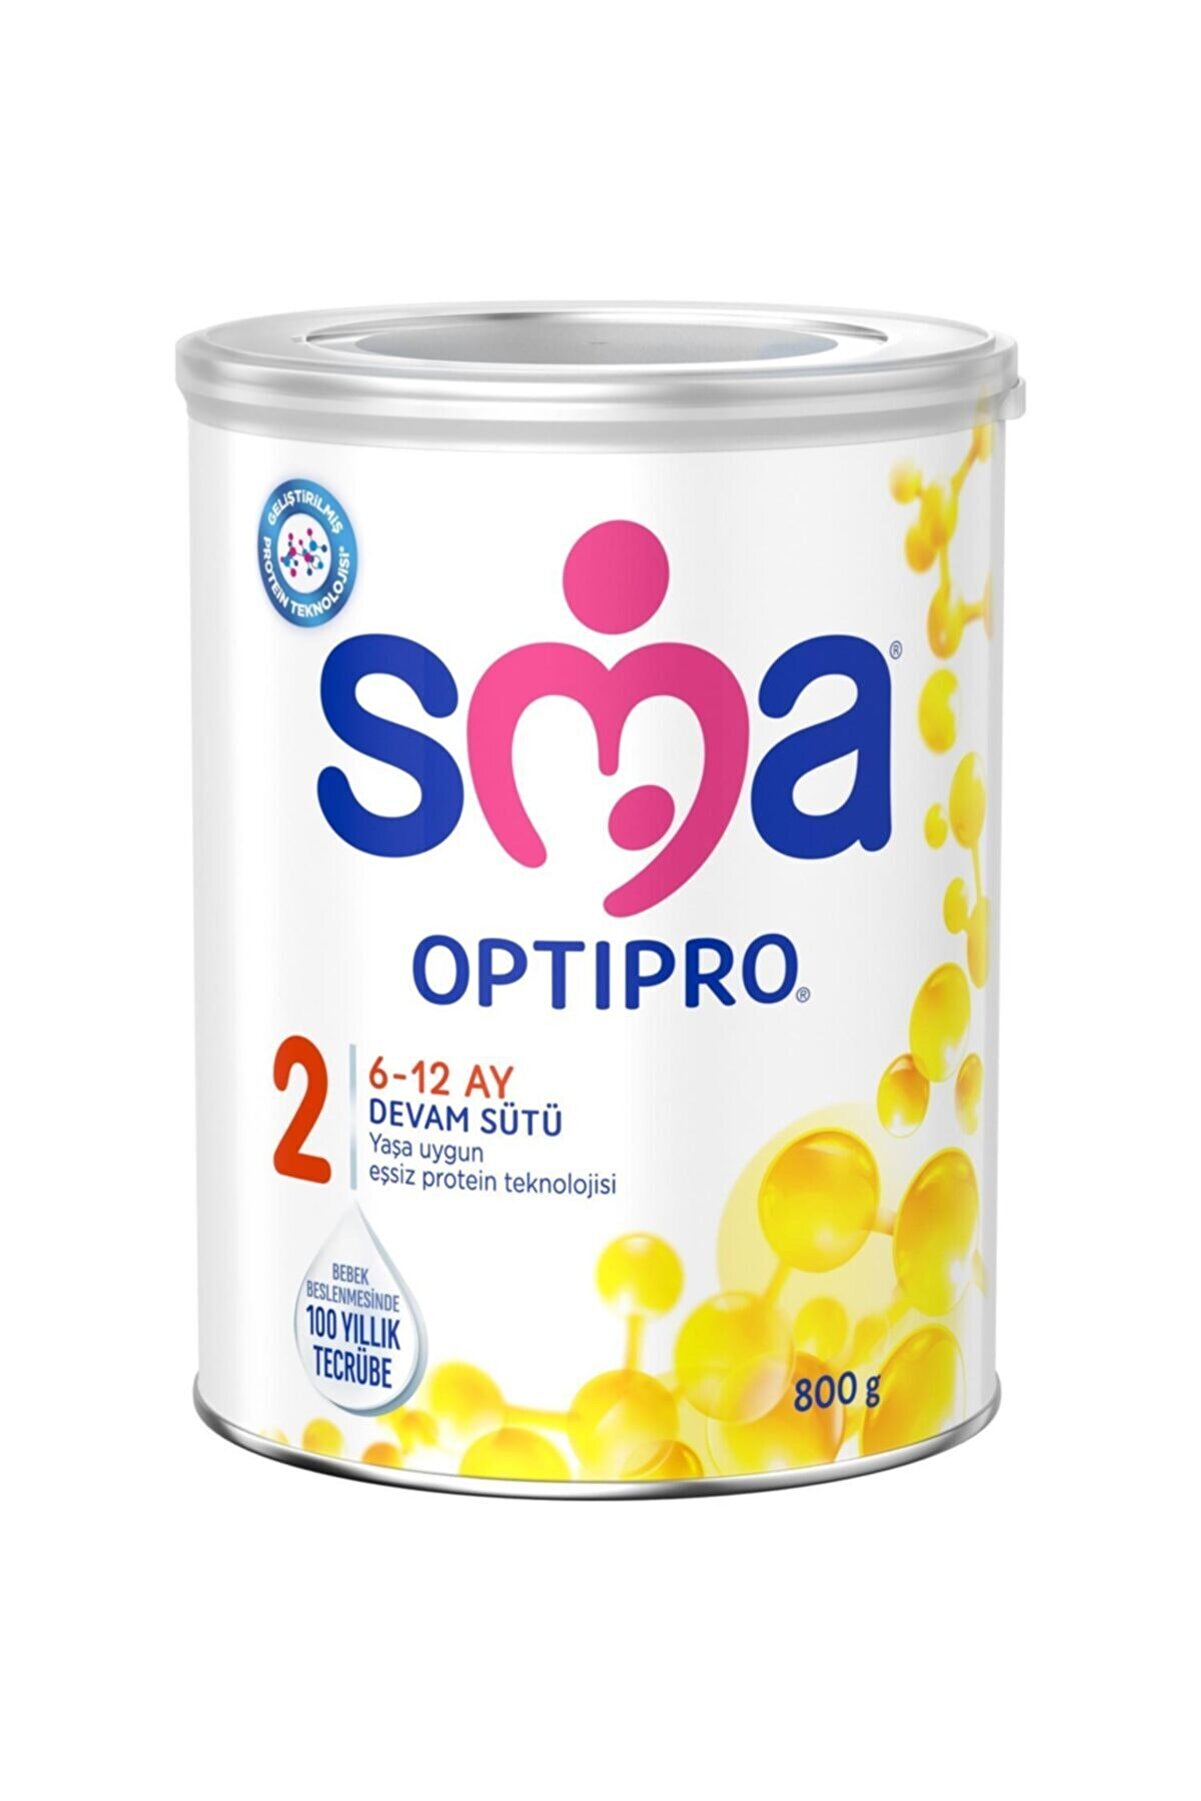 SMA Boze Optipro 2 Bebek Devam Sütü 6-12 Ay 800 Gr